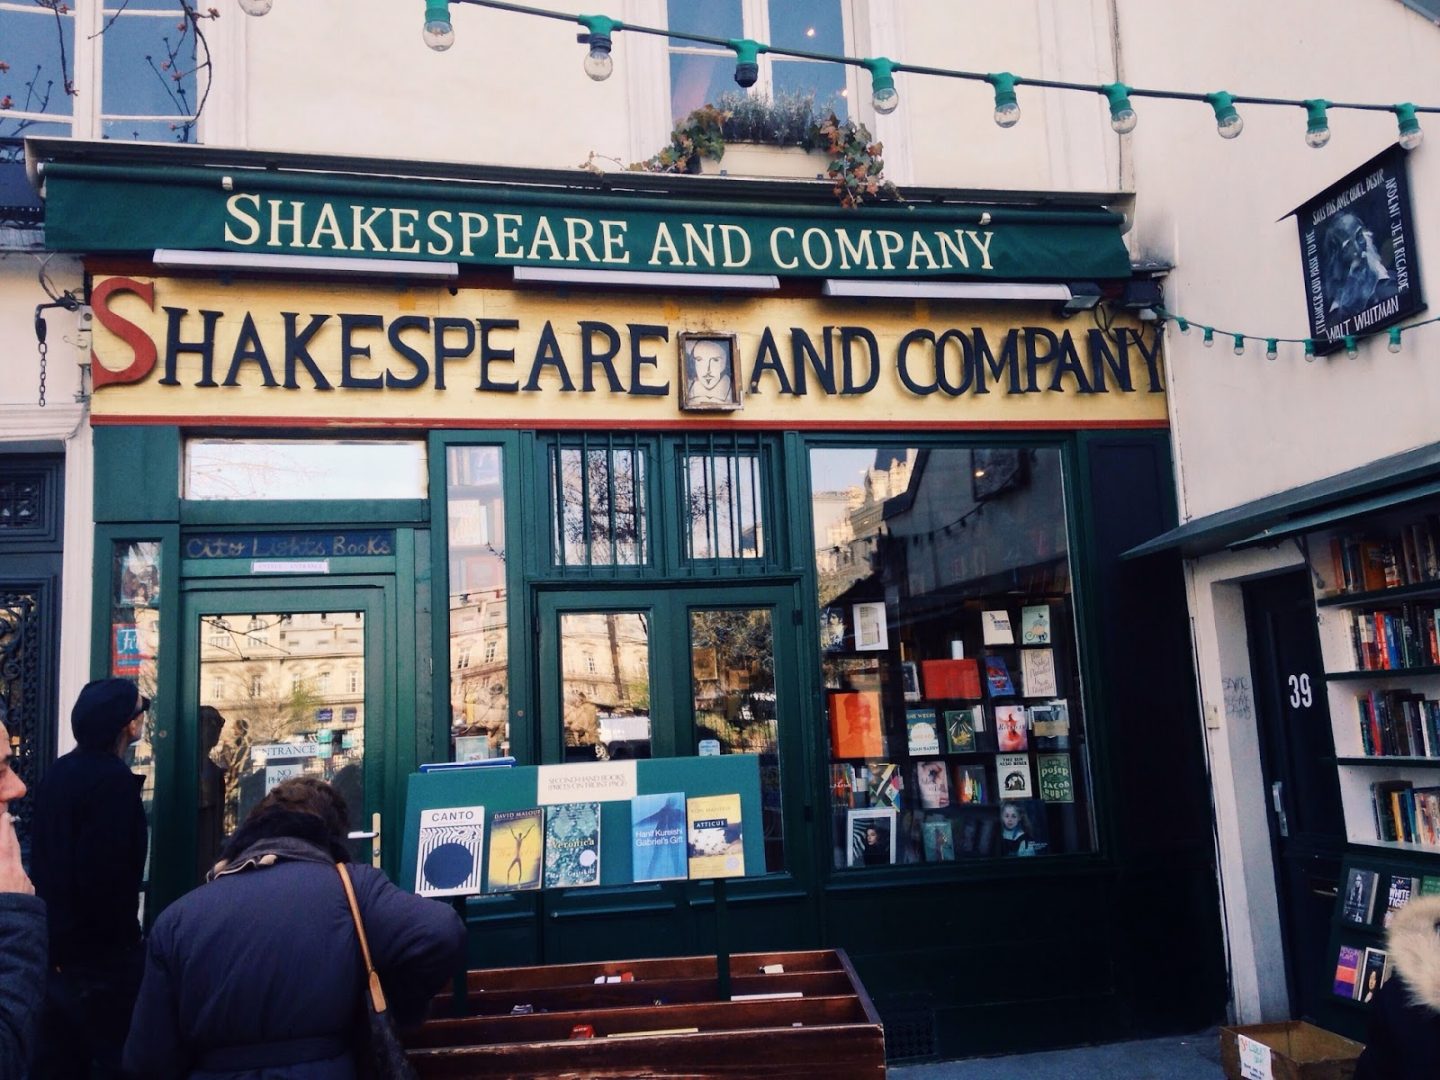 Shakespeare and company bookshop Paris